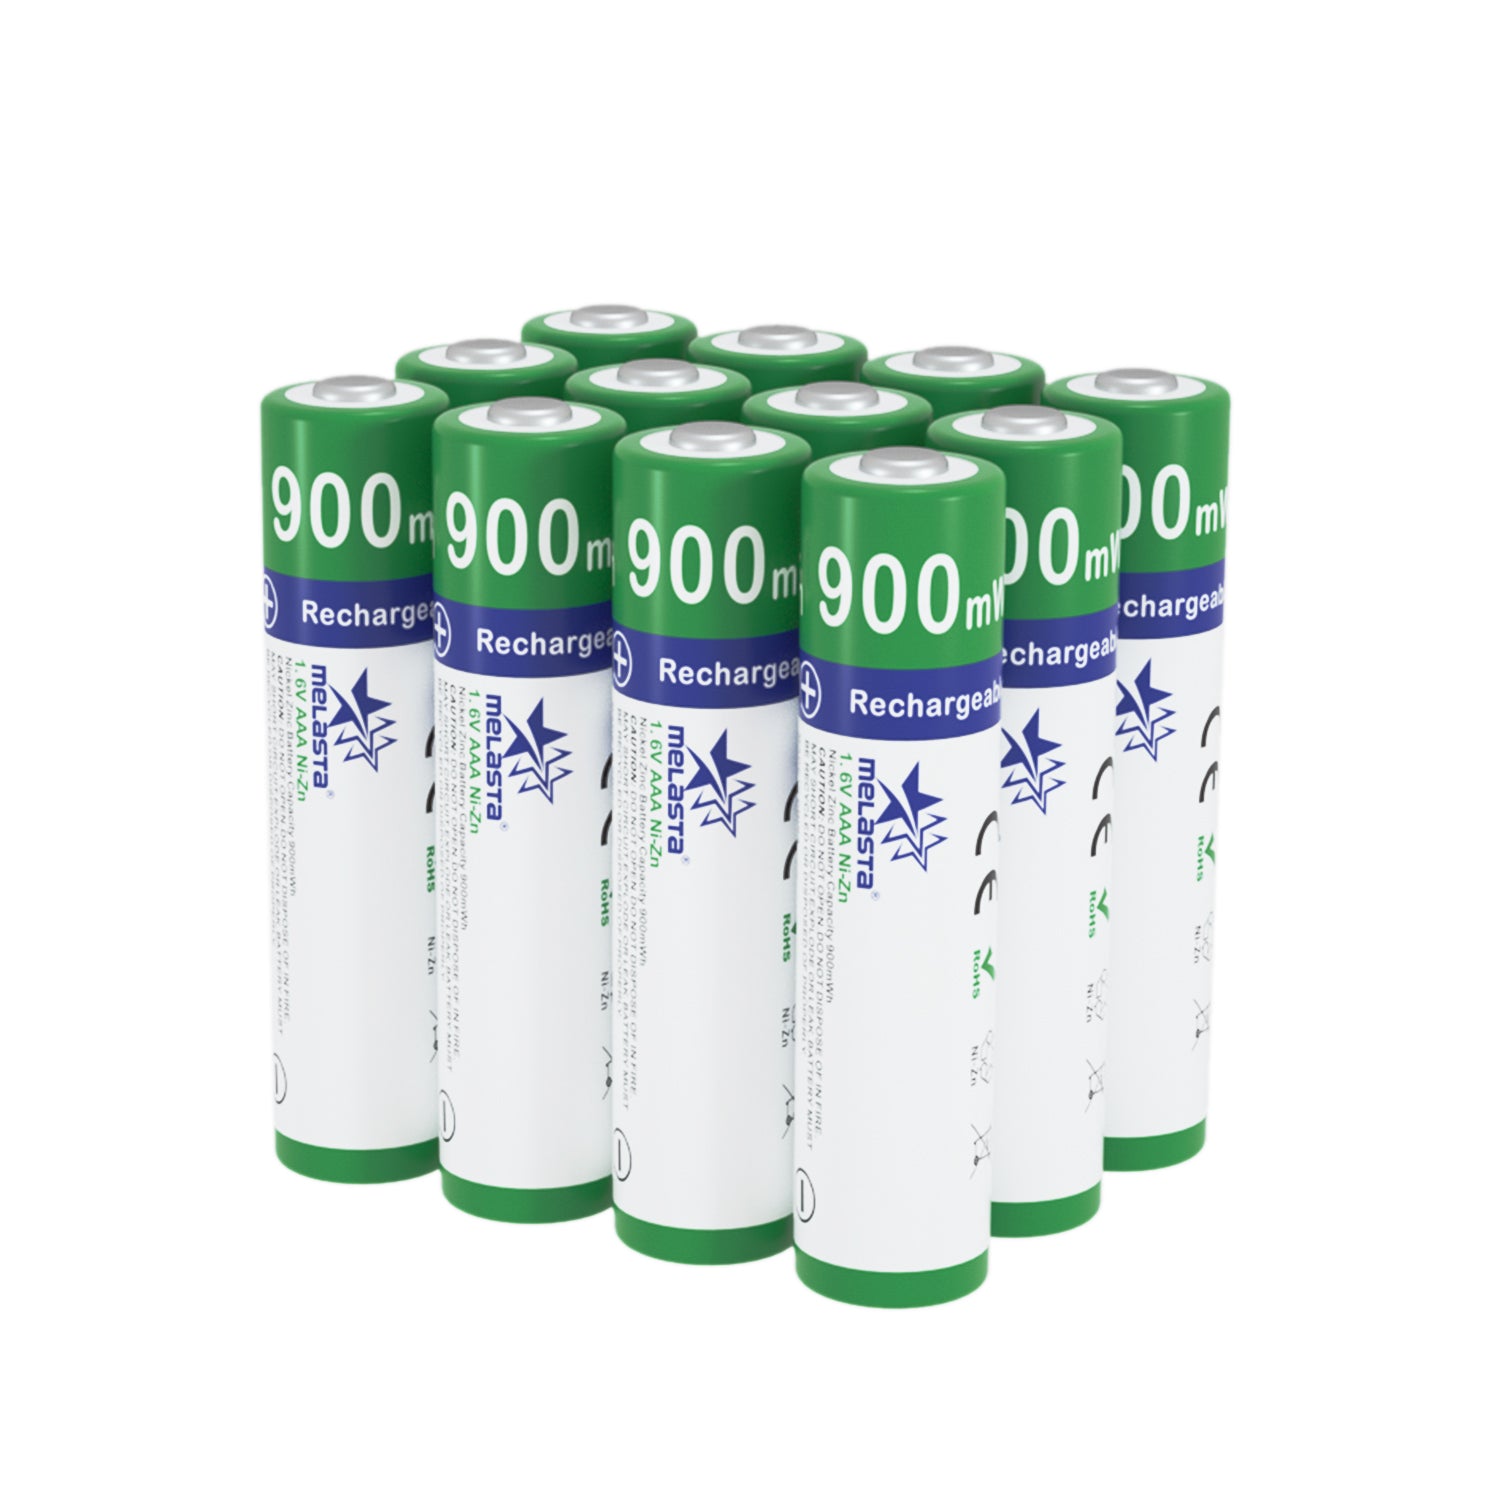 16PCS AAA 900mWh 1.6V Ni-Zn rechargeable battery – Melasta